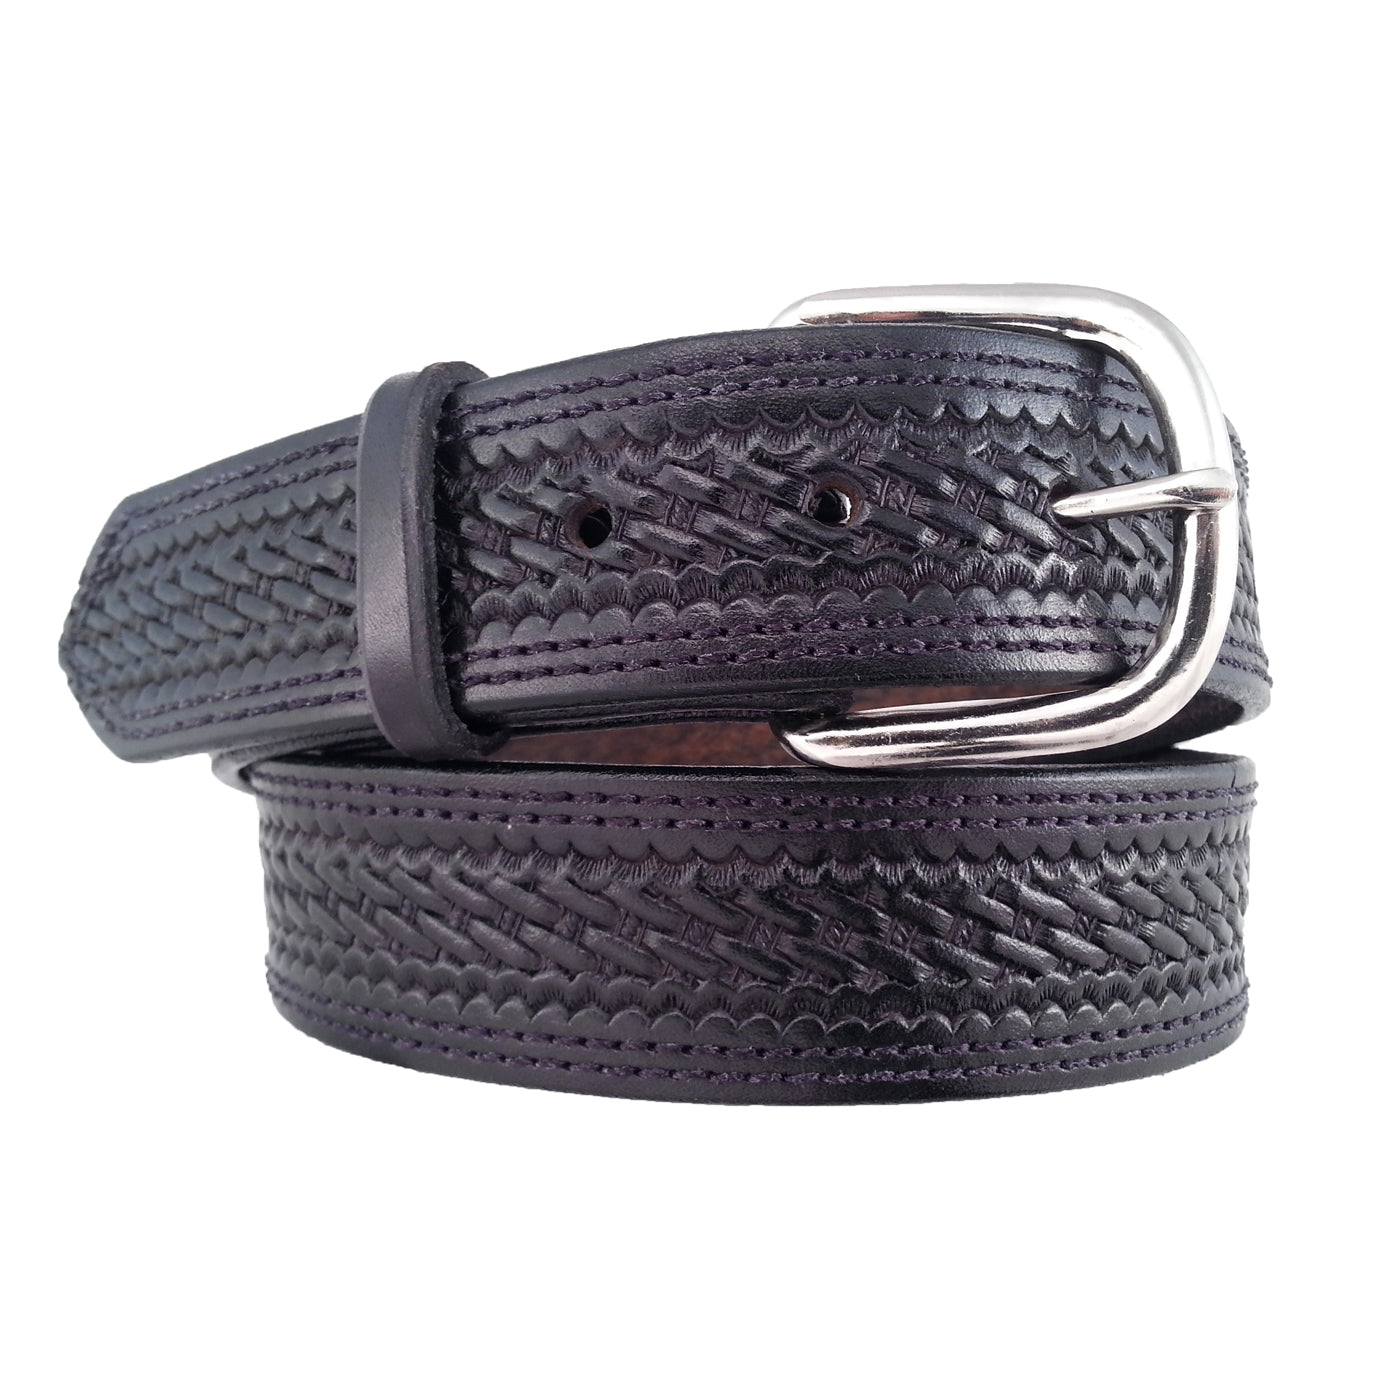 B Vertigo Braided Leather Belt